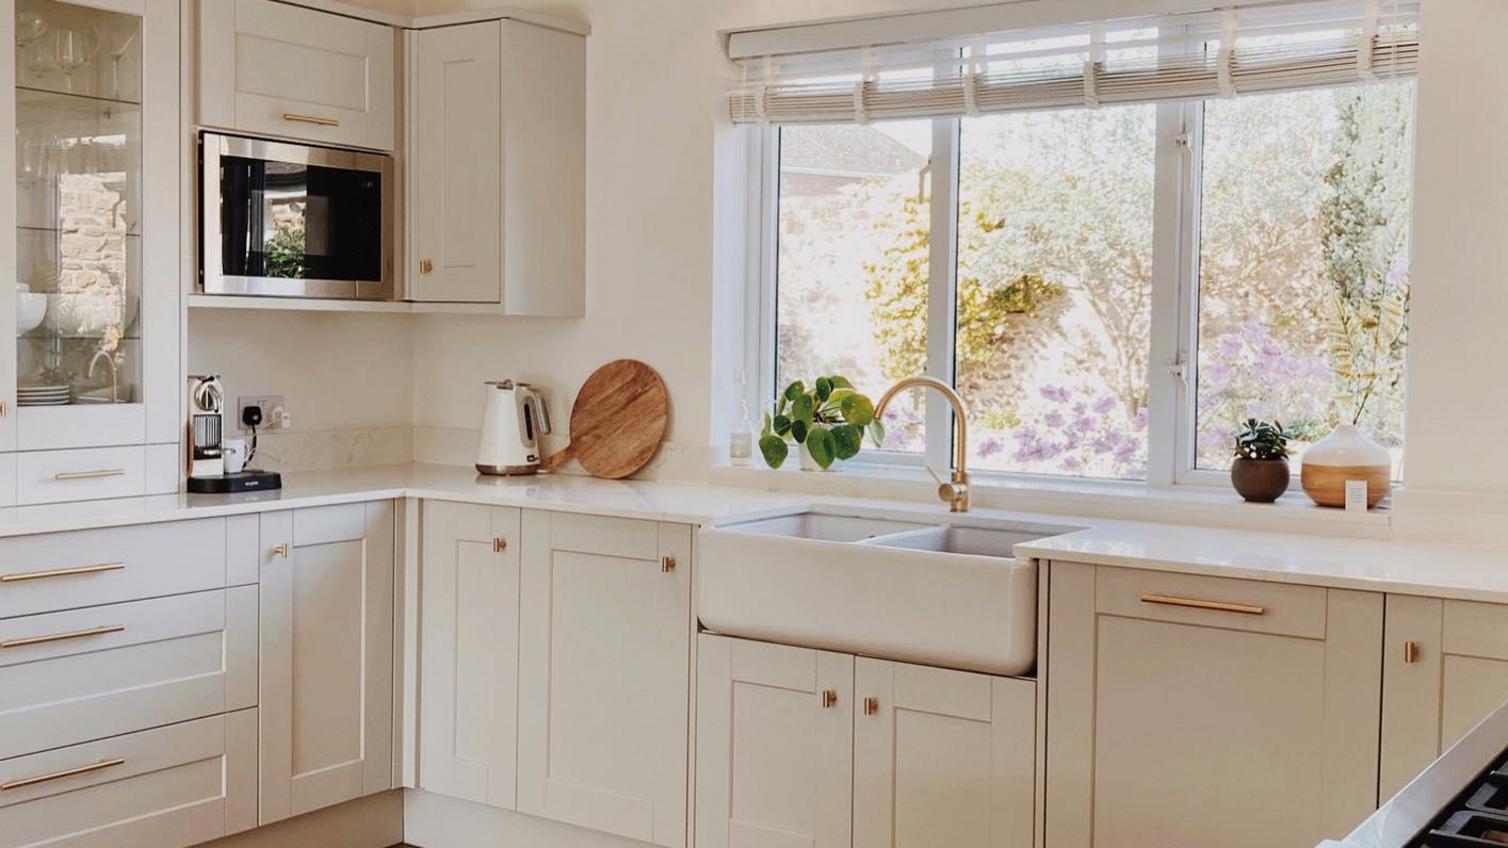 U-shaped cream kitchen idea using shaker doors and brass handles. Includes a double Belfast sink and oak chevron flooring.